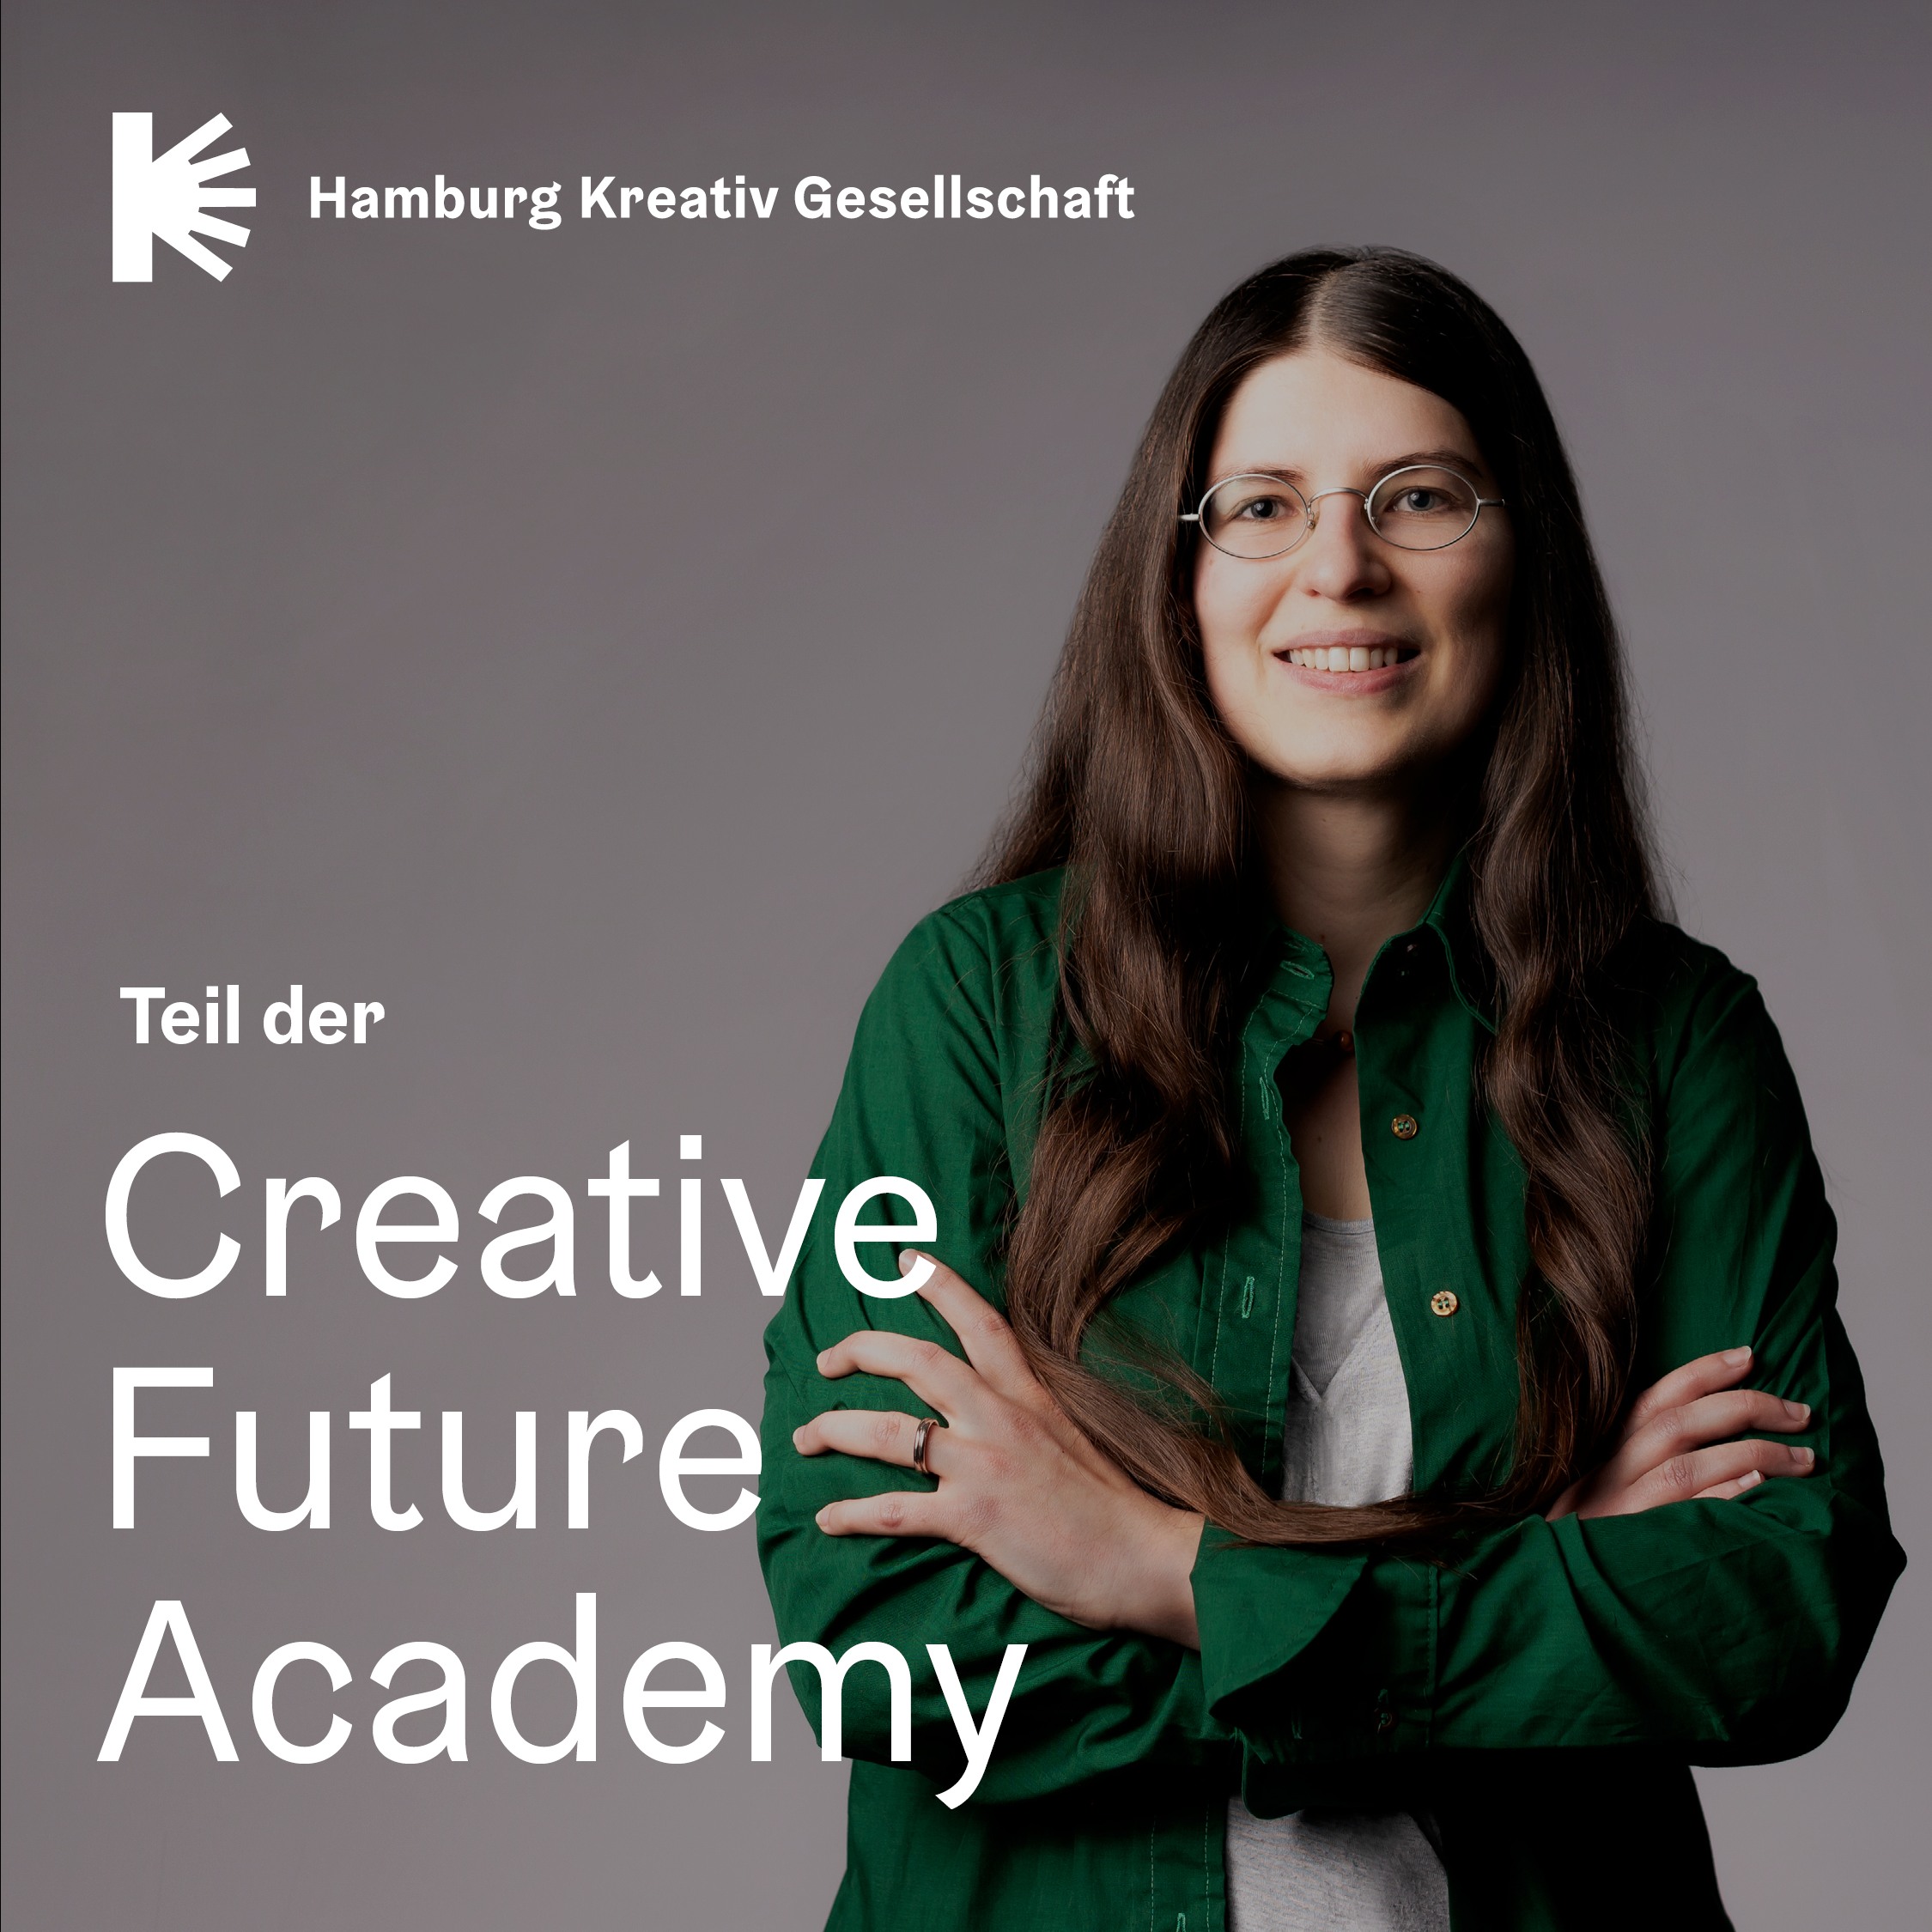 Esther-Kaufmann-Creative-Future-Academy-mit-Henrike-Berg-Mentorin-Hamburg-Kreativ-Gesellschaft